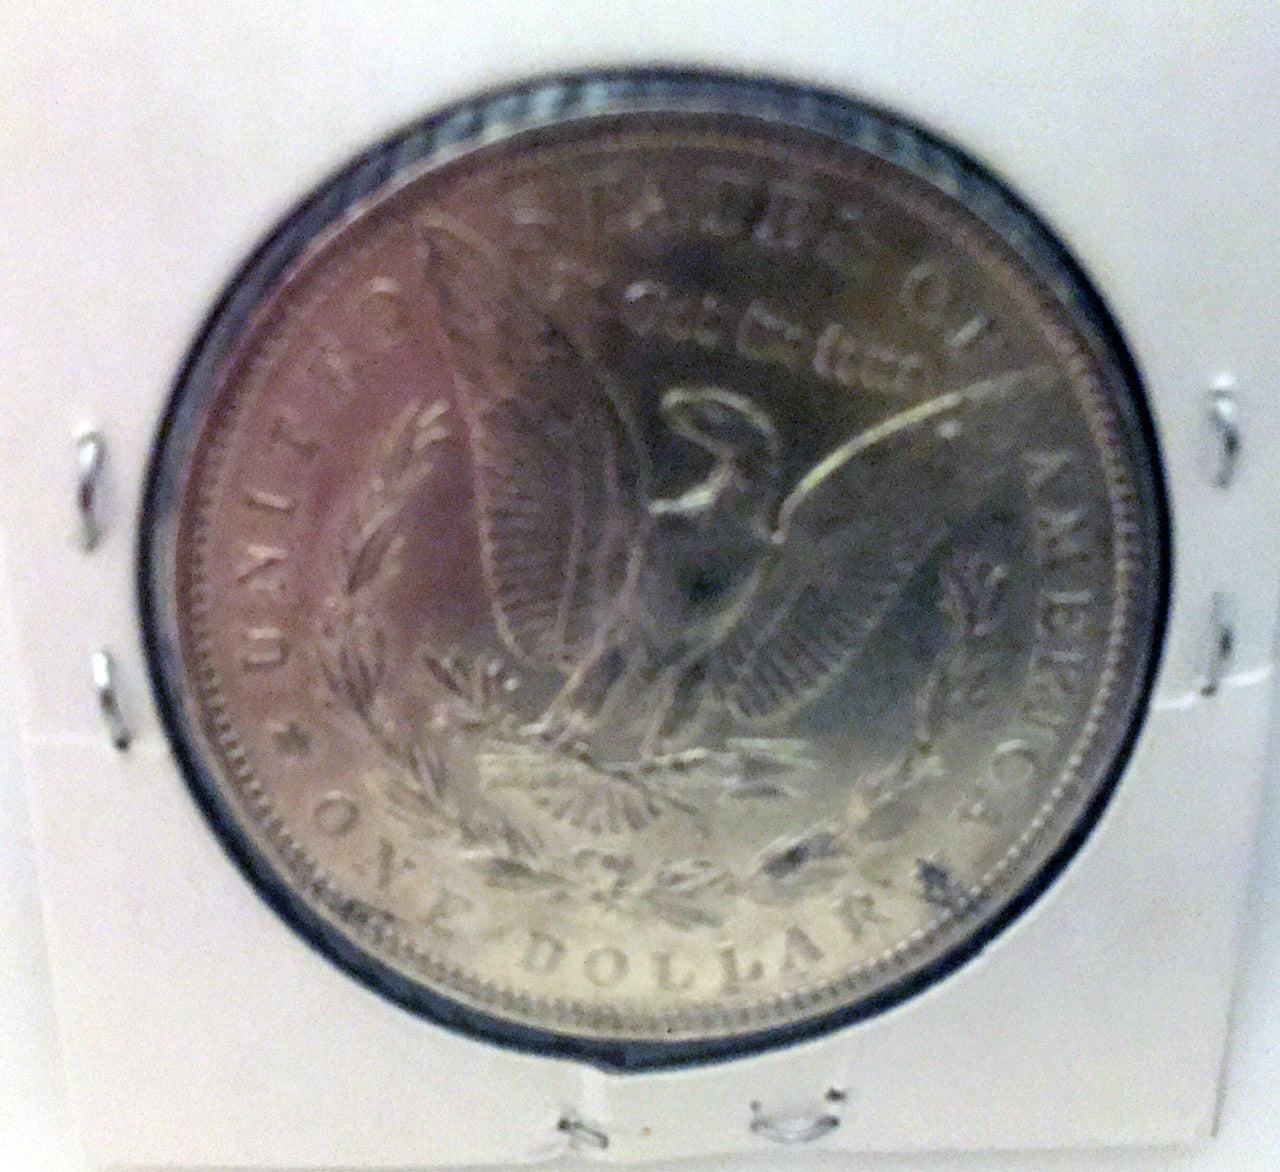 Morgan Dollar 1903 uncirculated UNC UNCIRC Silver Dollar Philadelphia - reverse